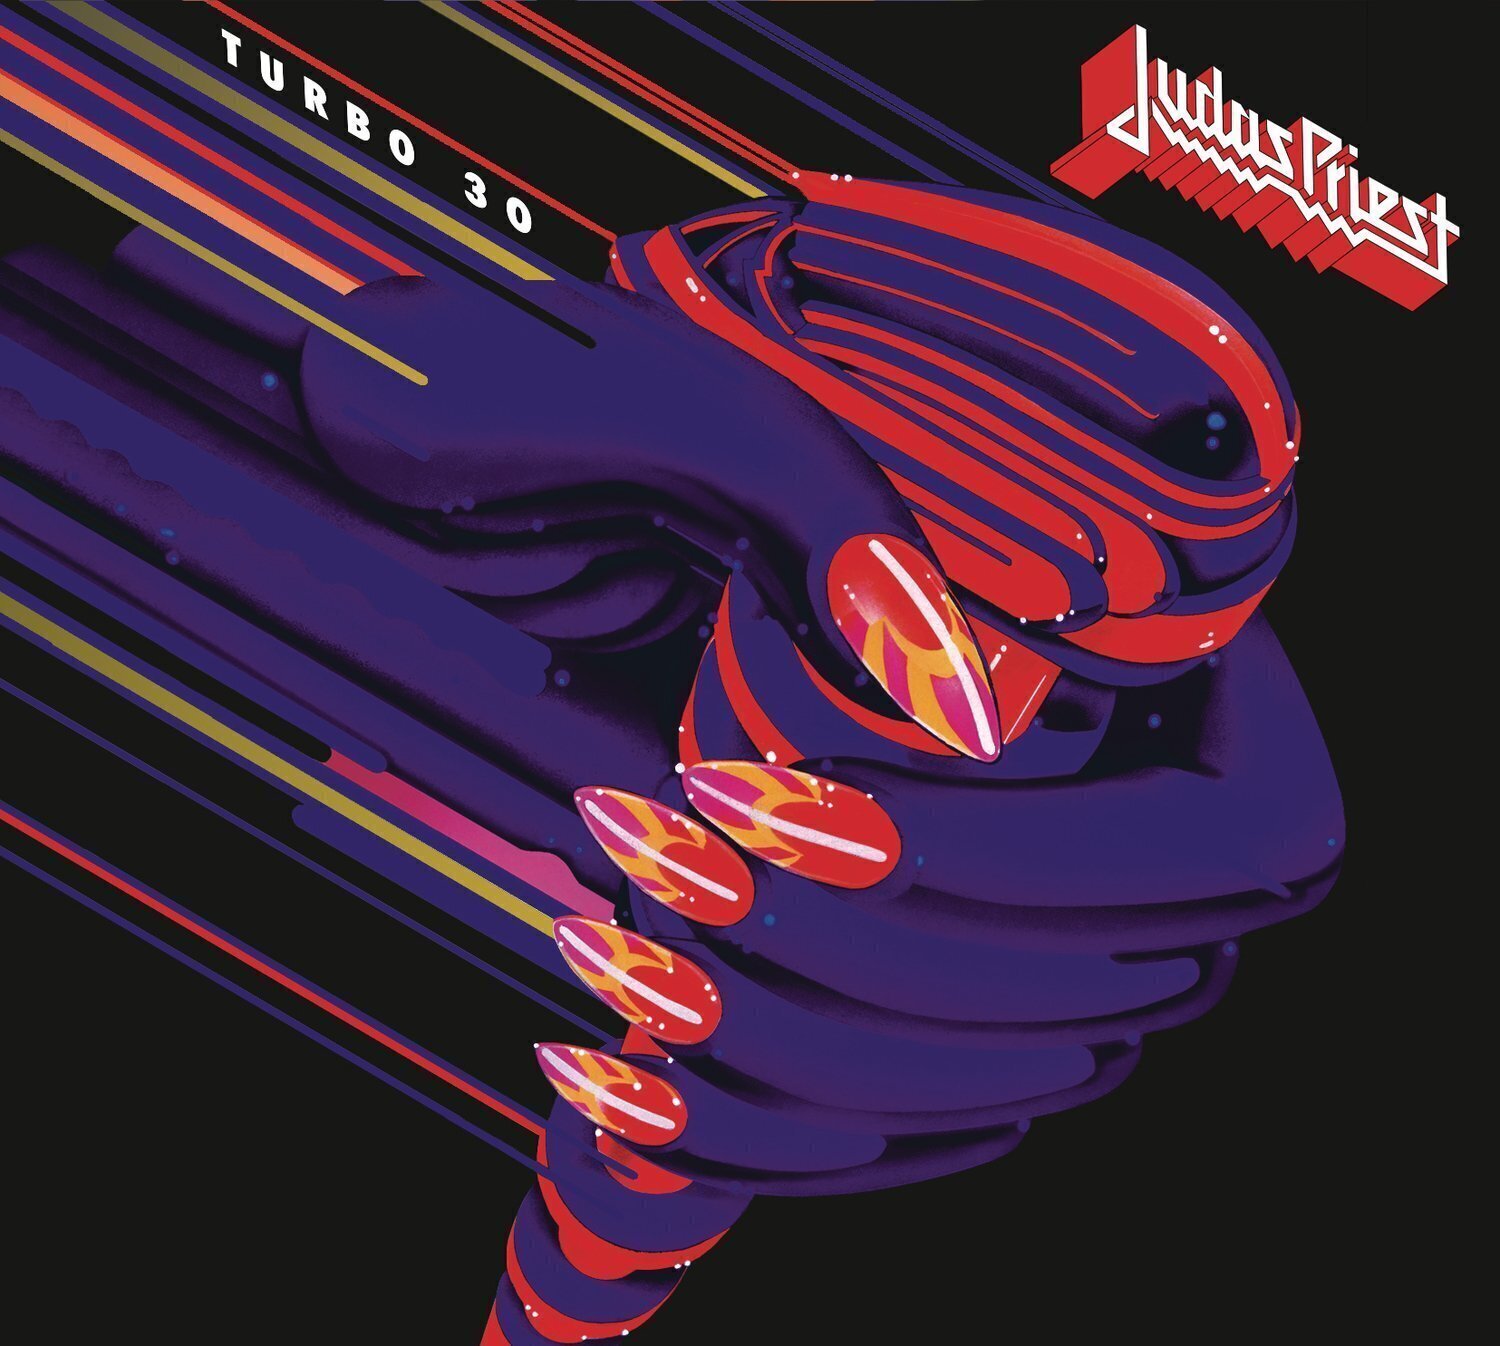 Glasbene CD Judas Priest - Turbo 30 (Anniversary Edition) (Remastered) (3 CD)